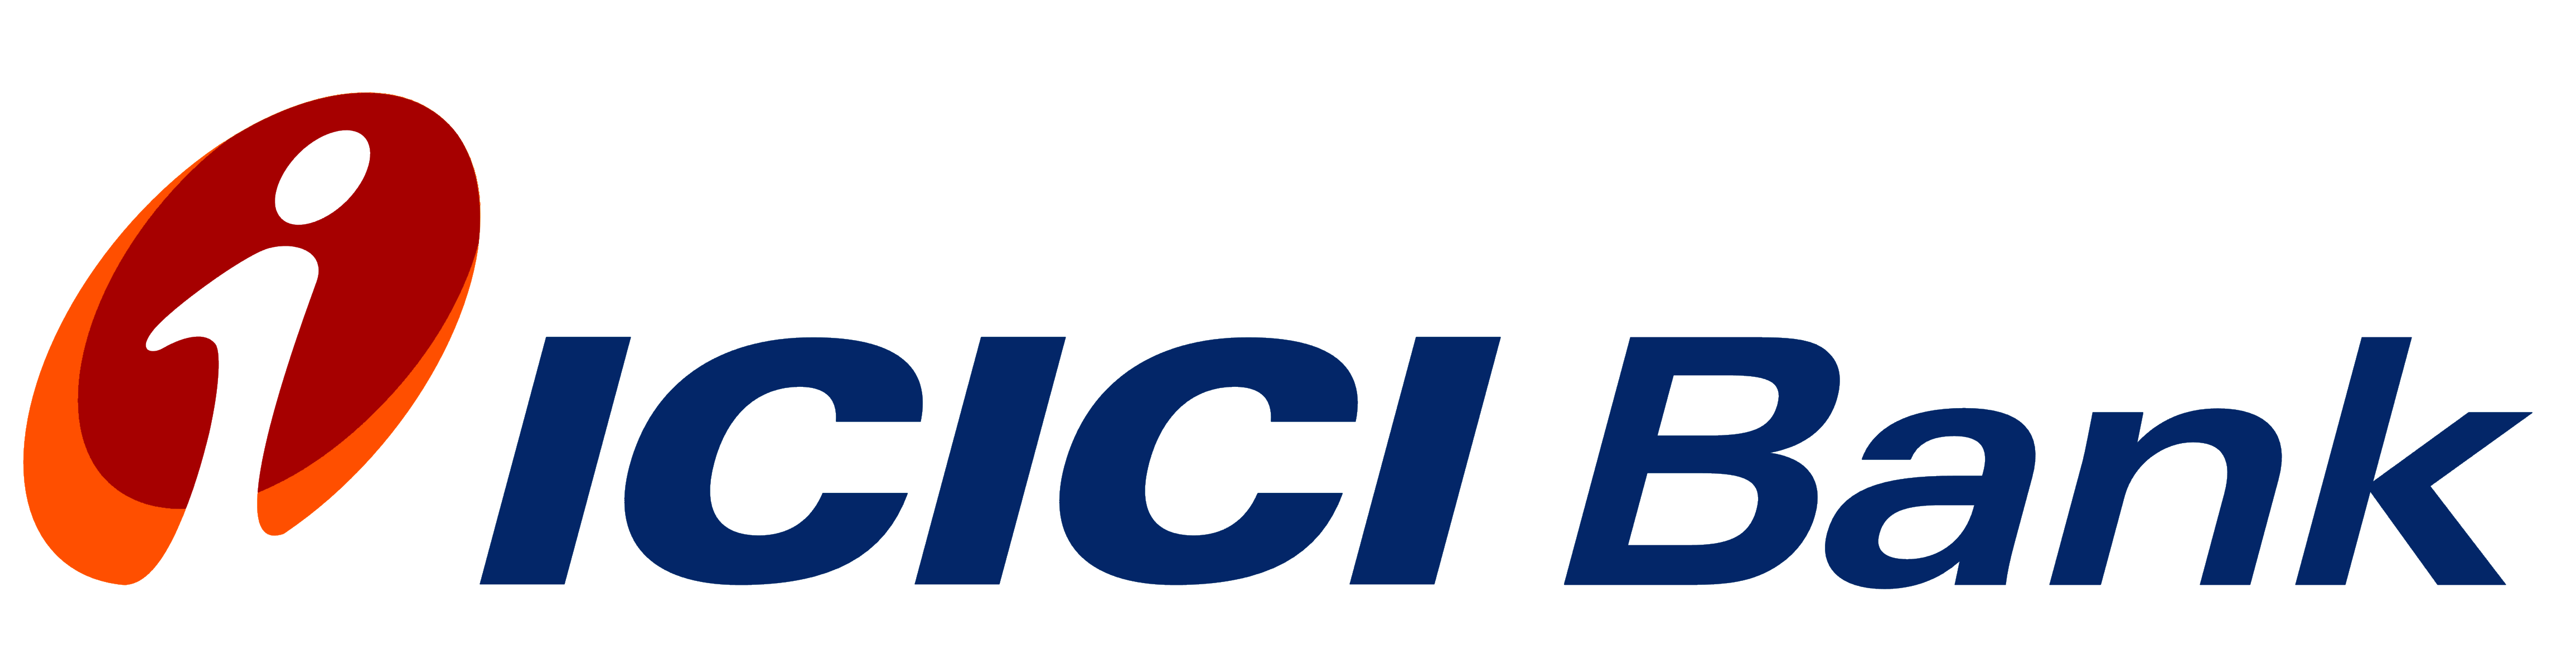 ICICI Bank Logo